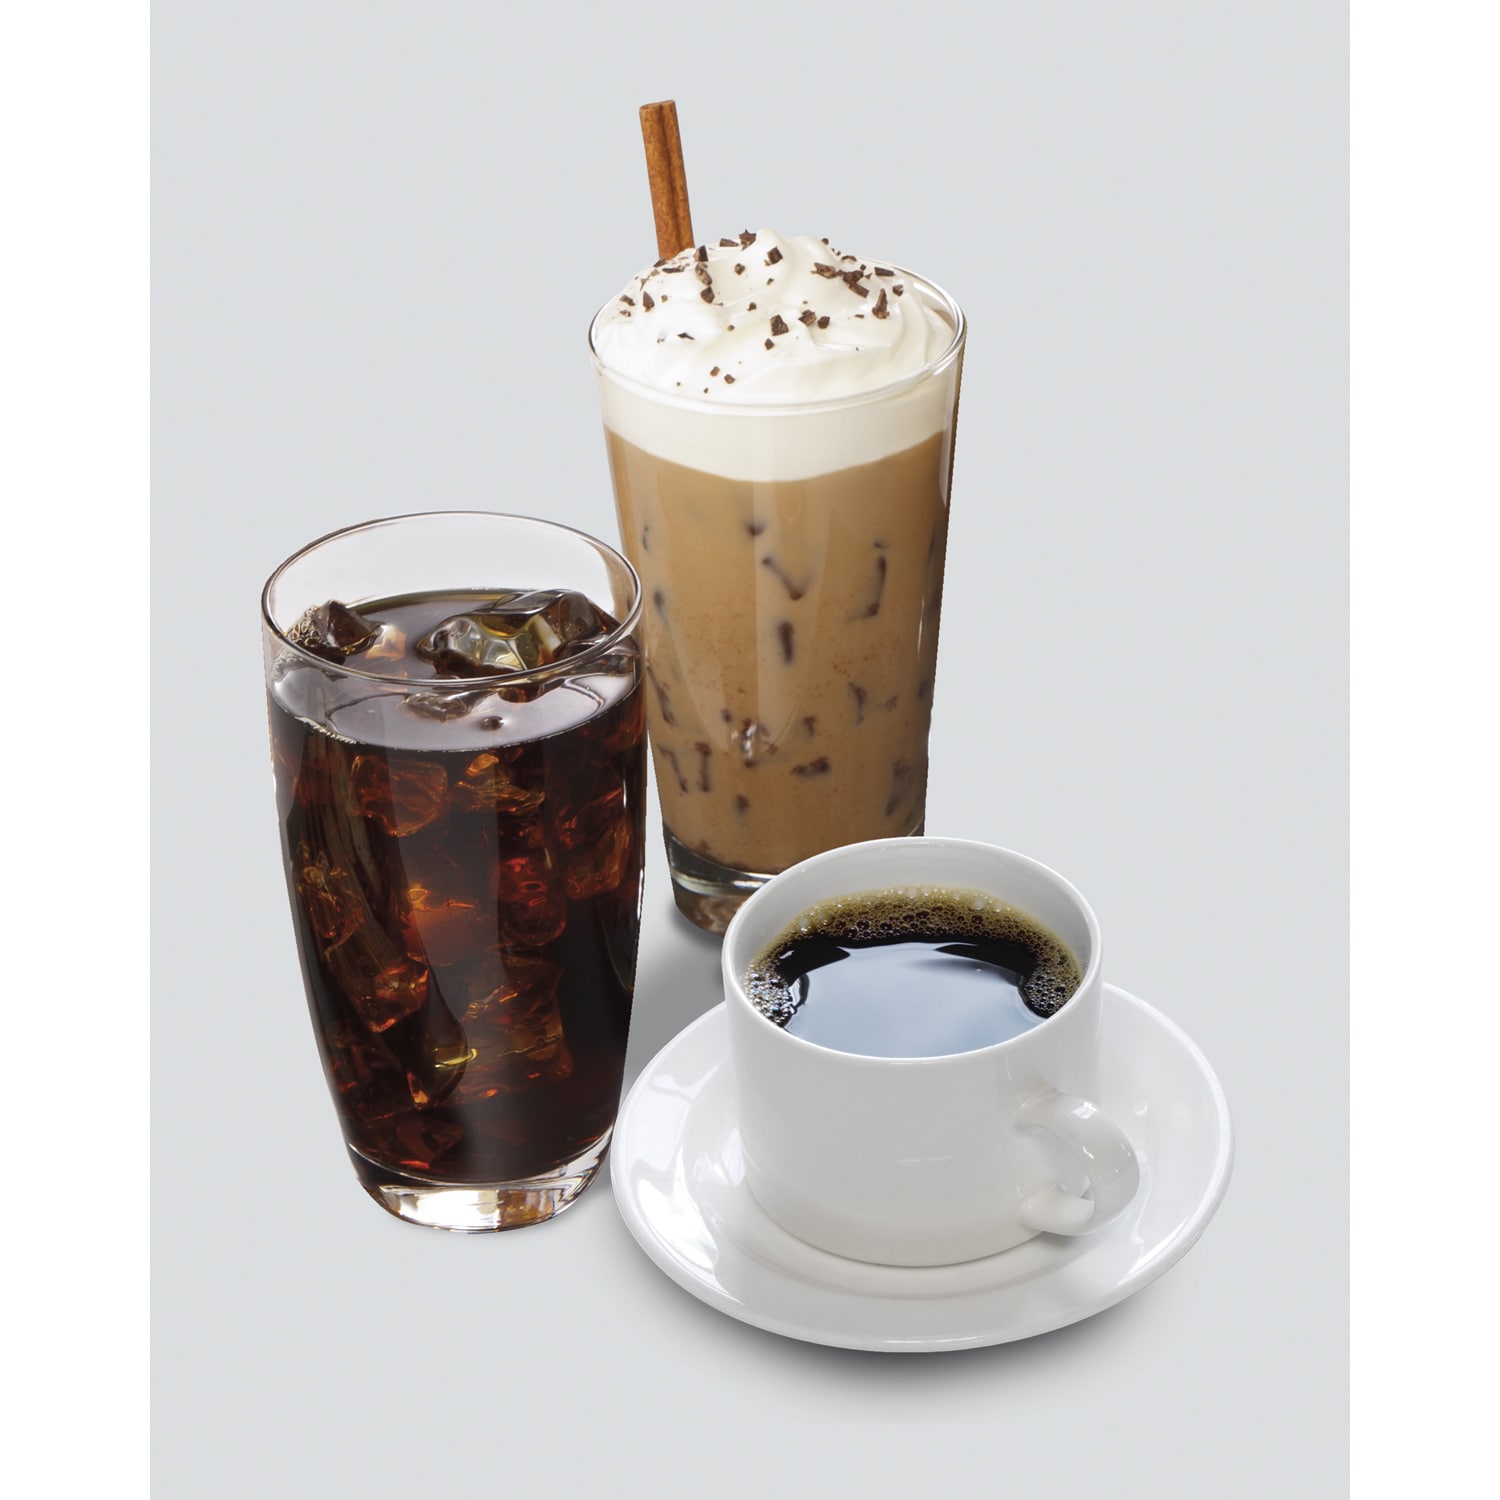 Hamilton Beach 47900 12-Cup Coffee Maker - Black for sale online